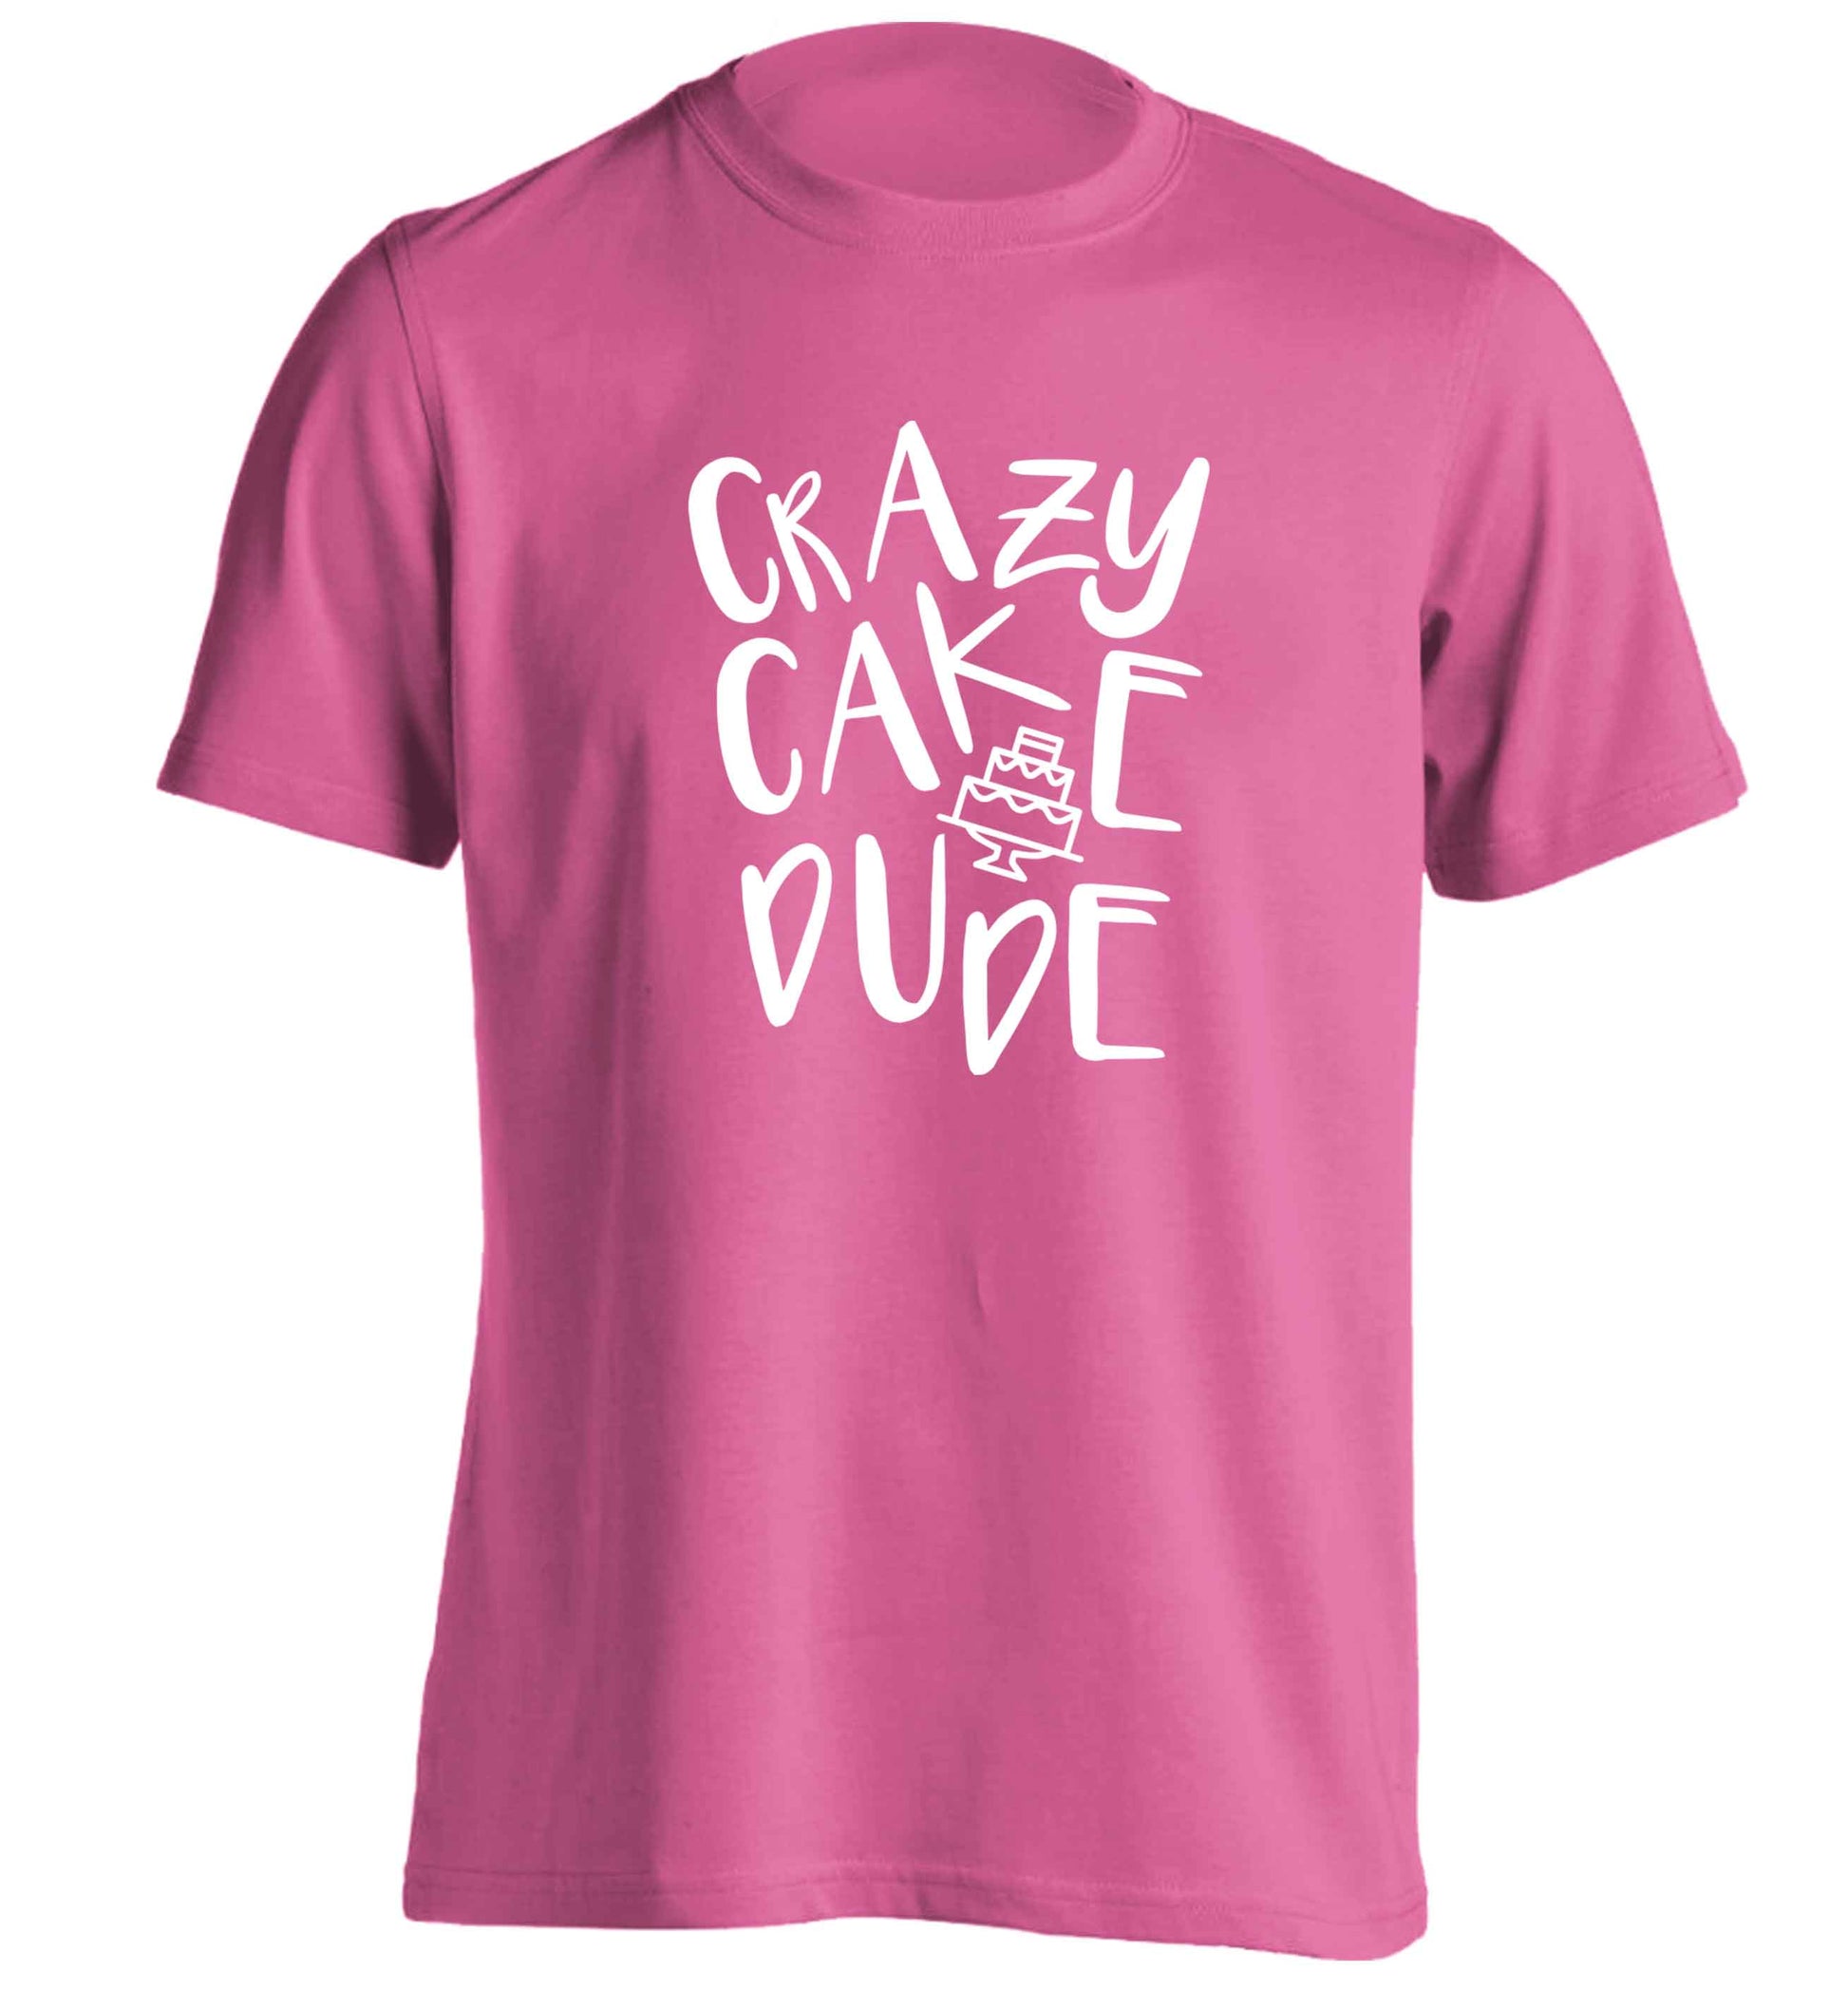 Crazy cake dude adults unisex pink Tshirt 2XL